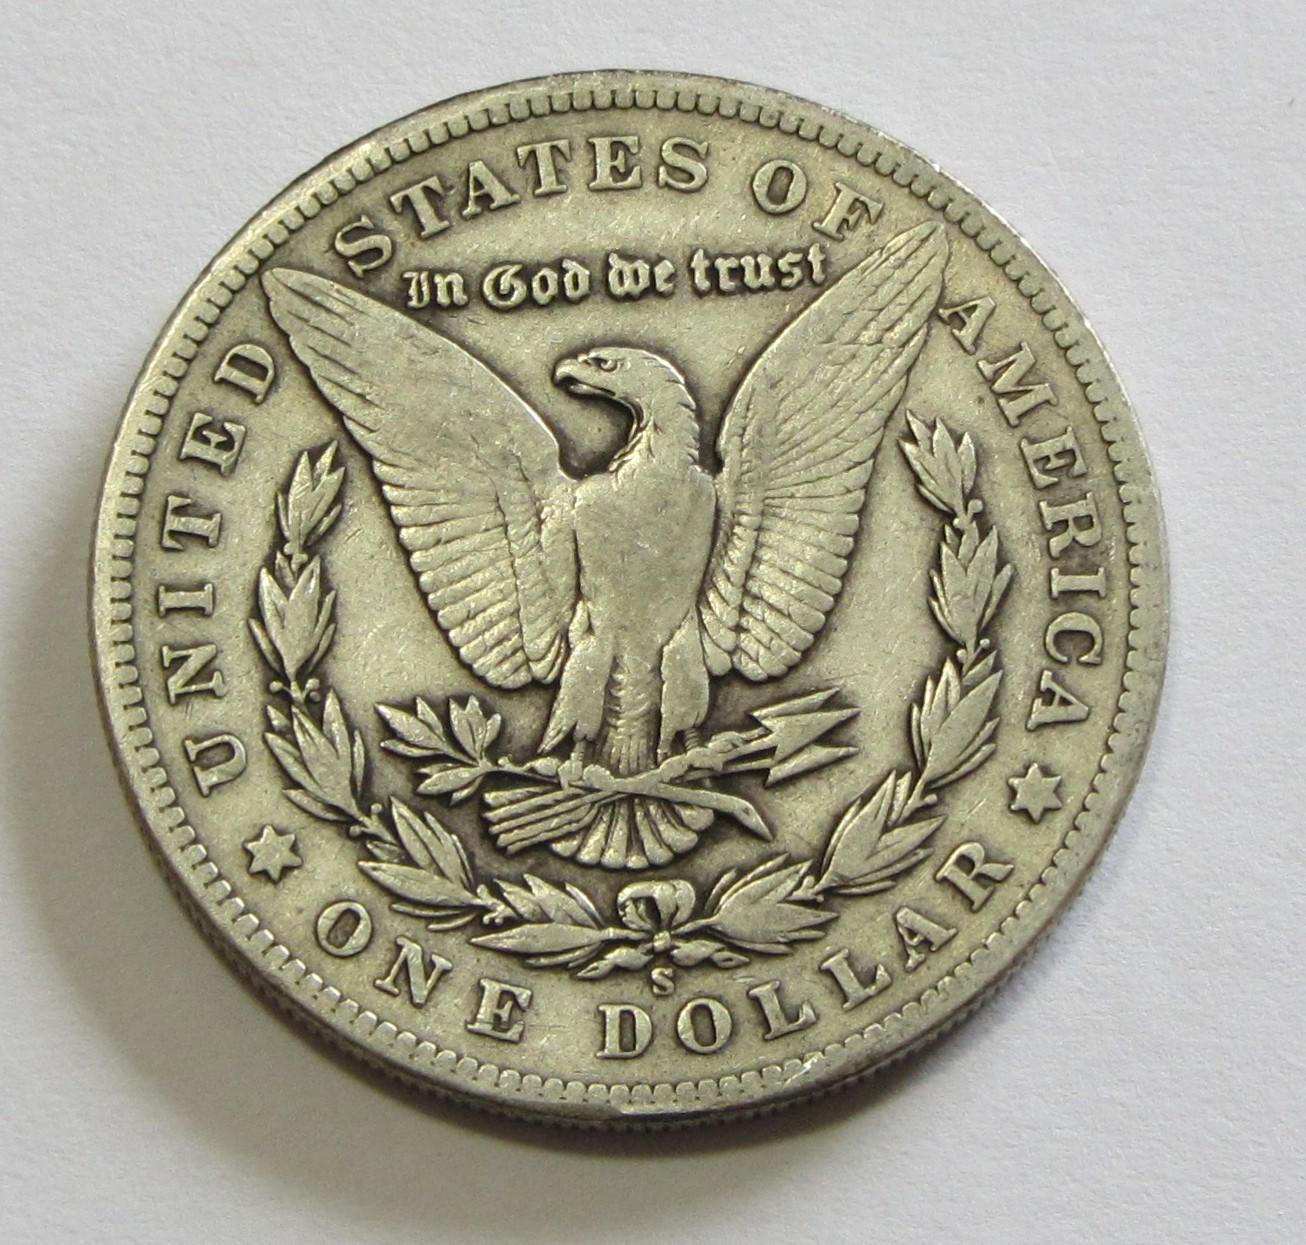 1902-S $1 MORGAN